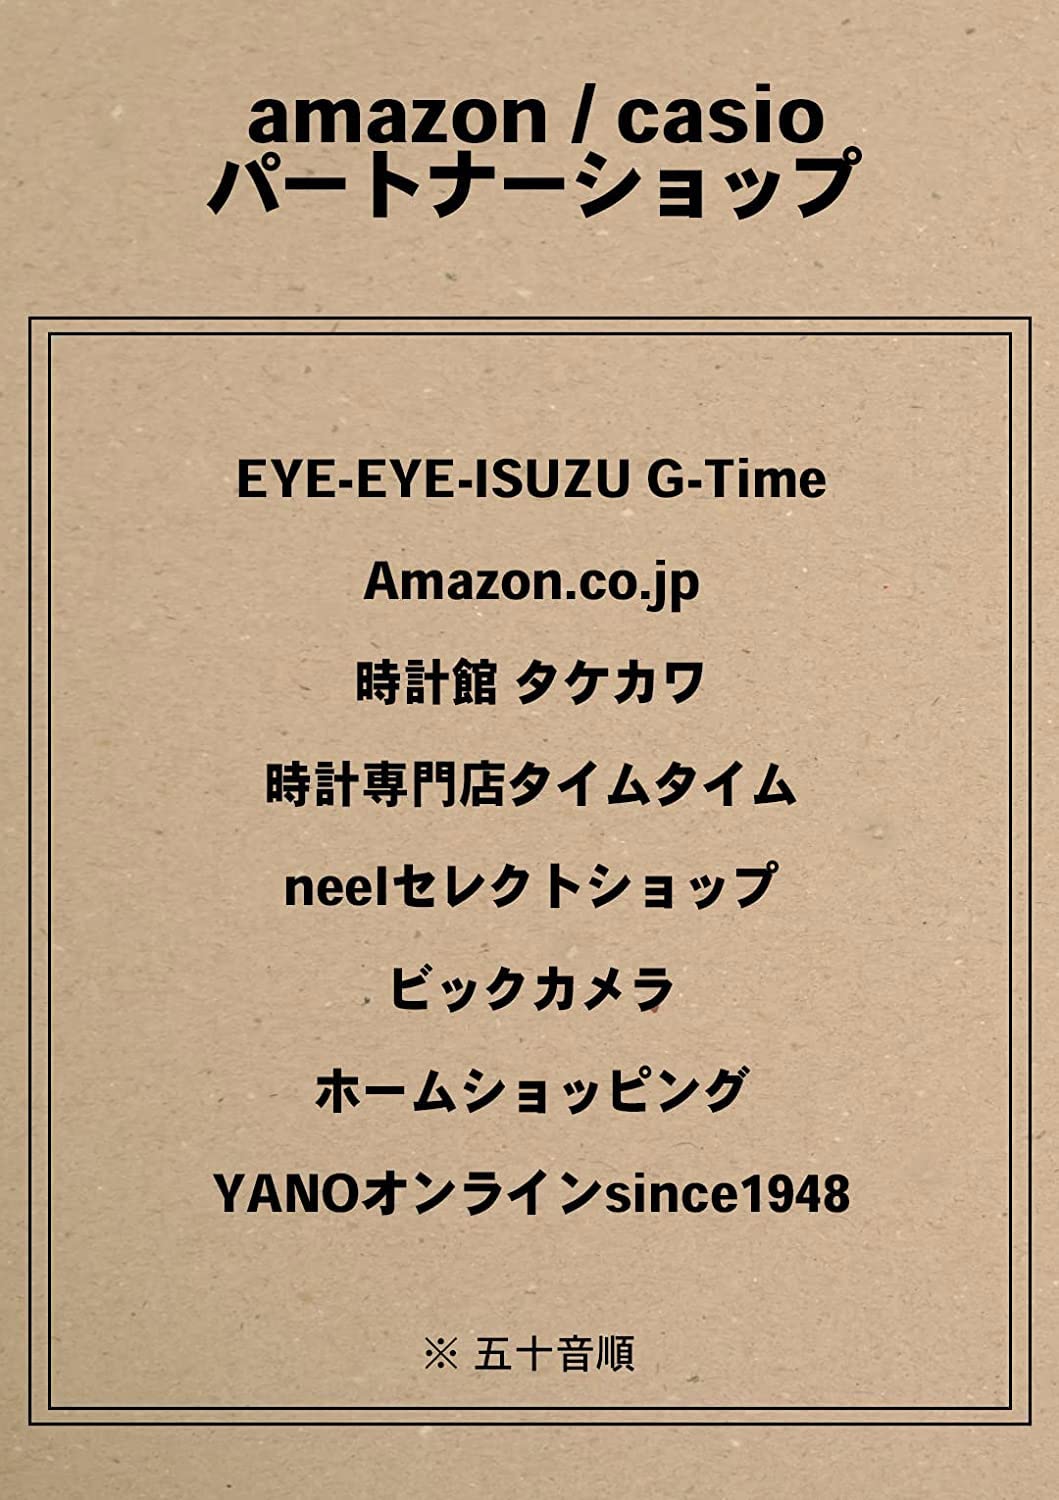 Casio GW-9500-3JF [G-Shock Master of G Series MUDMAN Triple Sensor Model] Watch Japan Import July 2023 Model